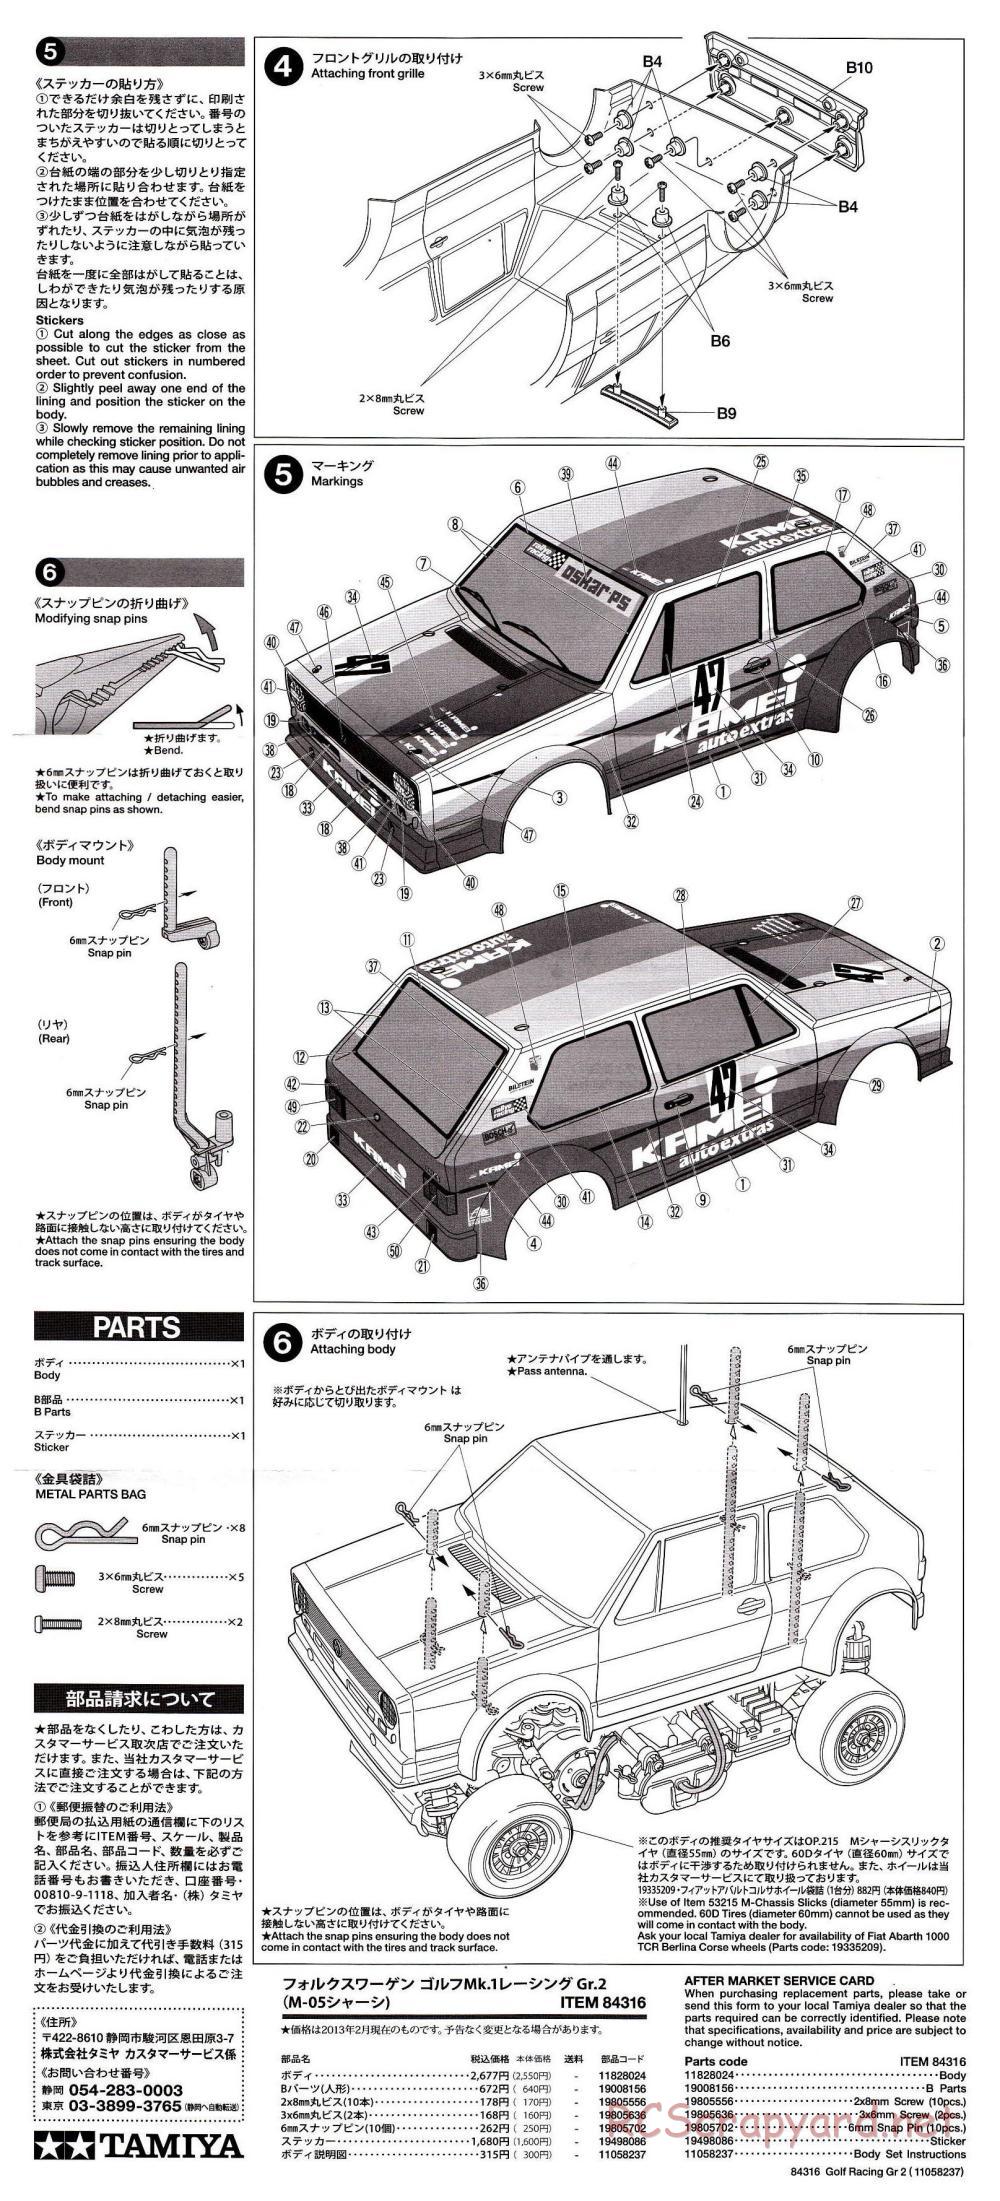 Tamiya - Volkswagen Golf Mk.1 Grp 2 - M-05 Chassis - Body Manual - Page 2